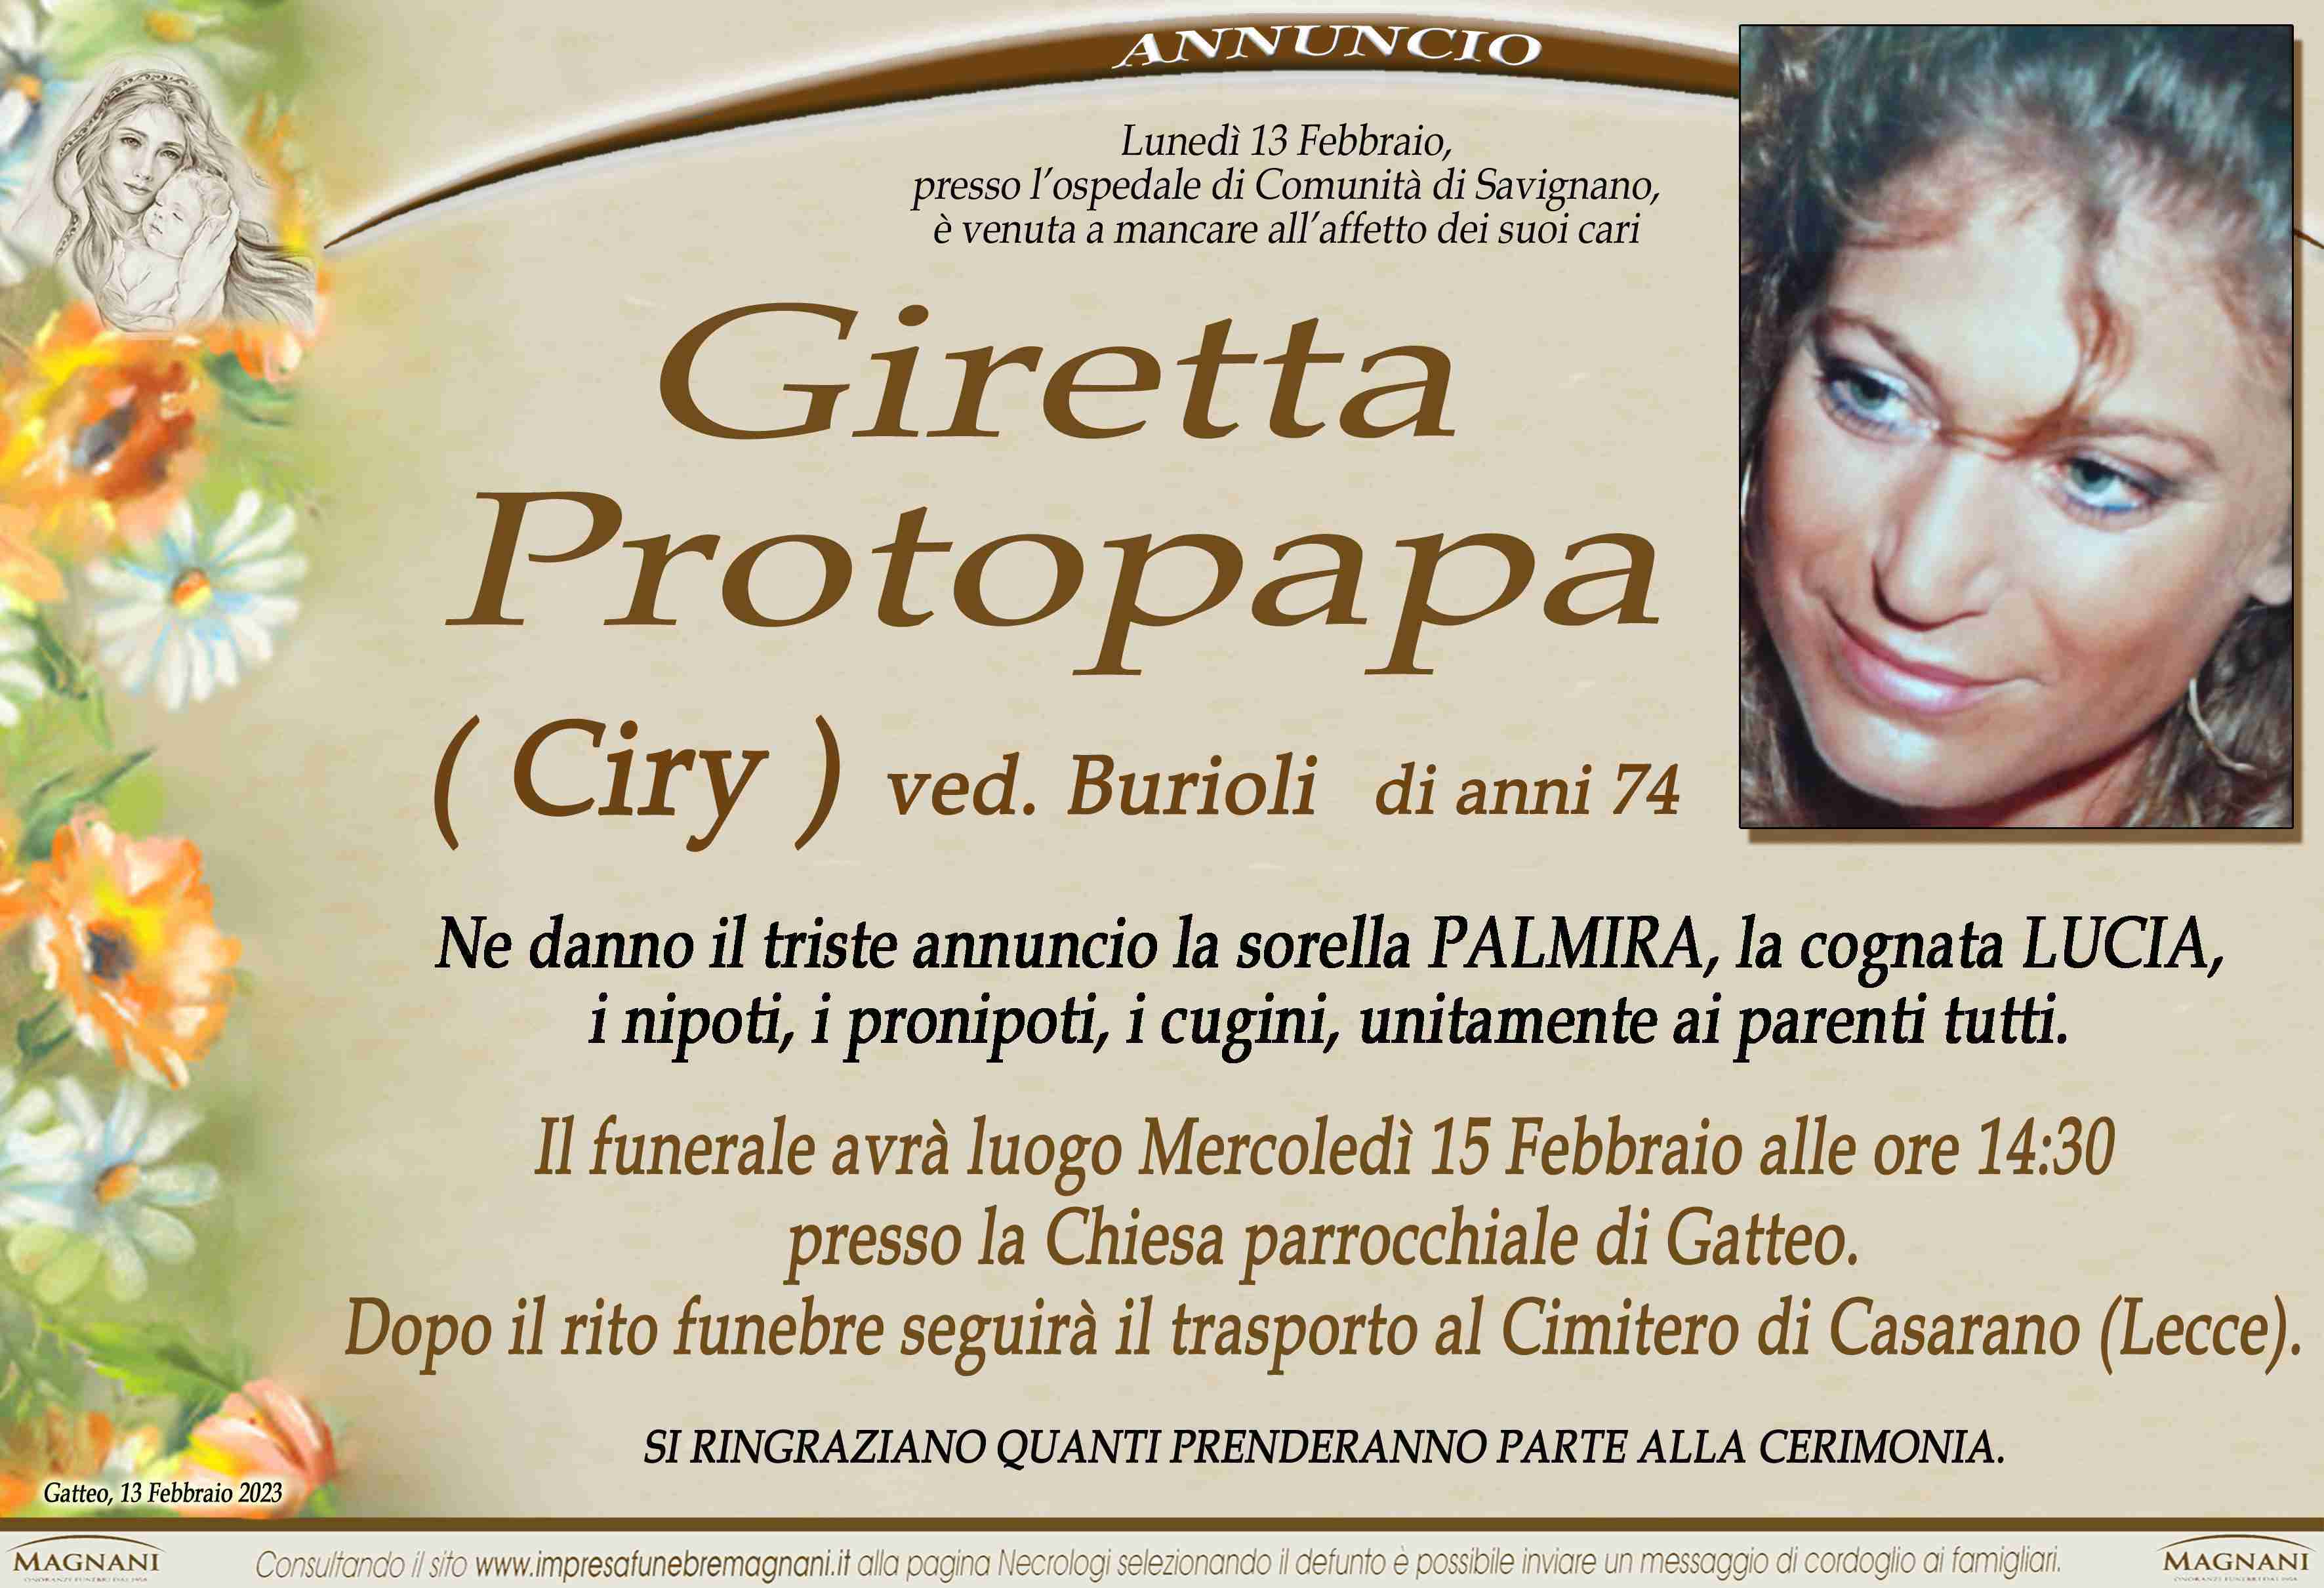 Protopapa Giretta (Ciry)